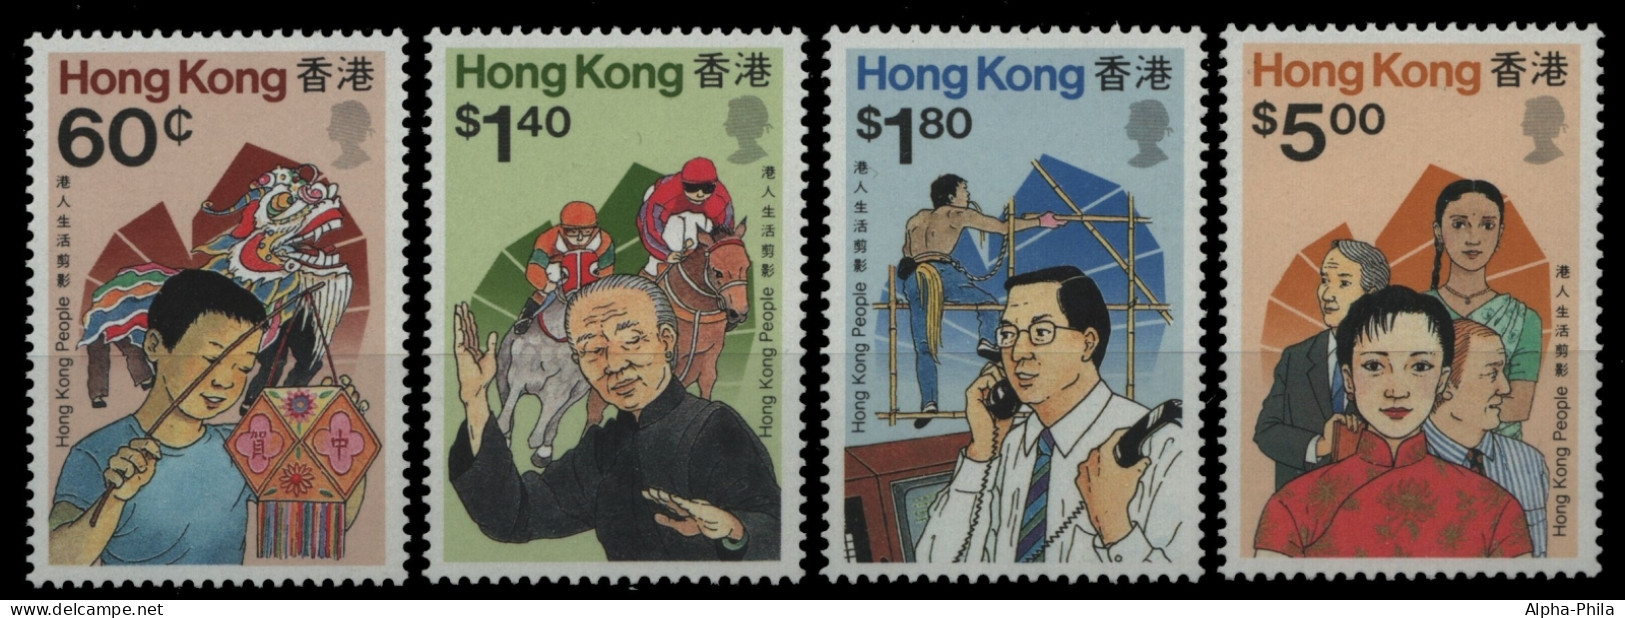 Hongkong 1989 - Mi-Nr. 567-570 ** - MNH - Leben In Hongkong - Nuevos